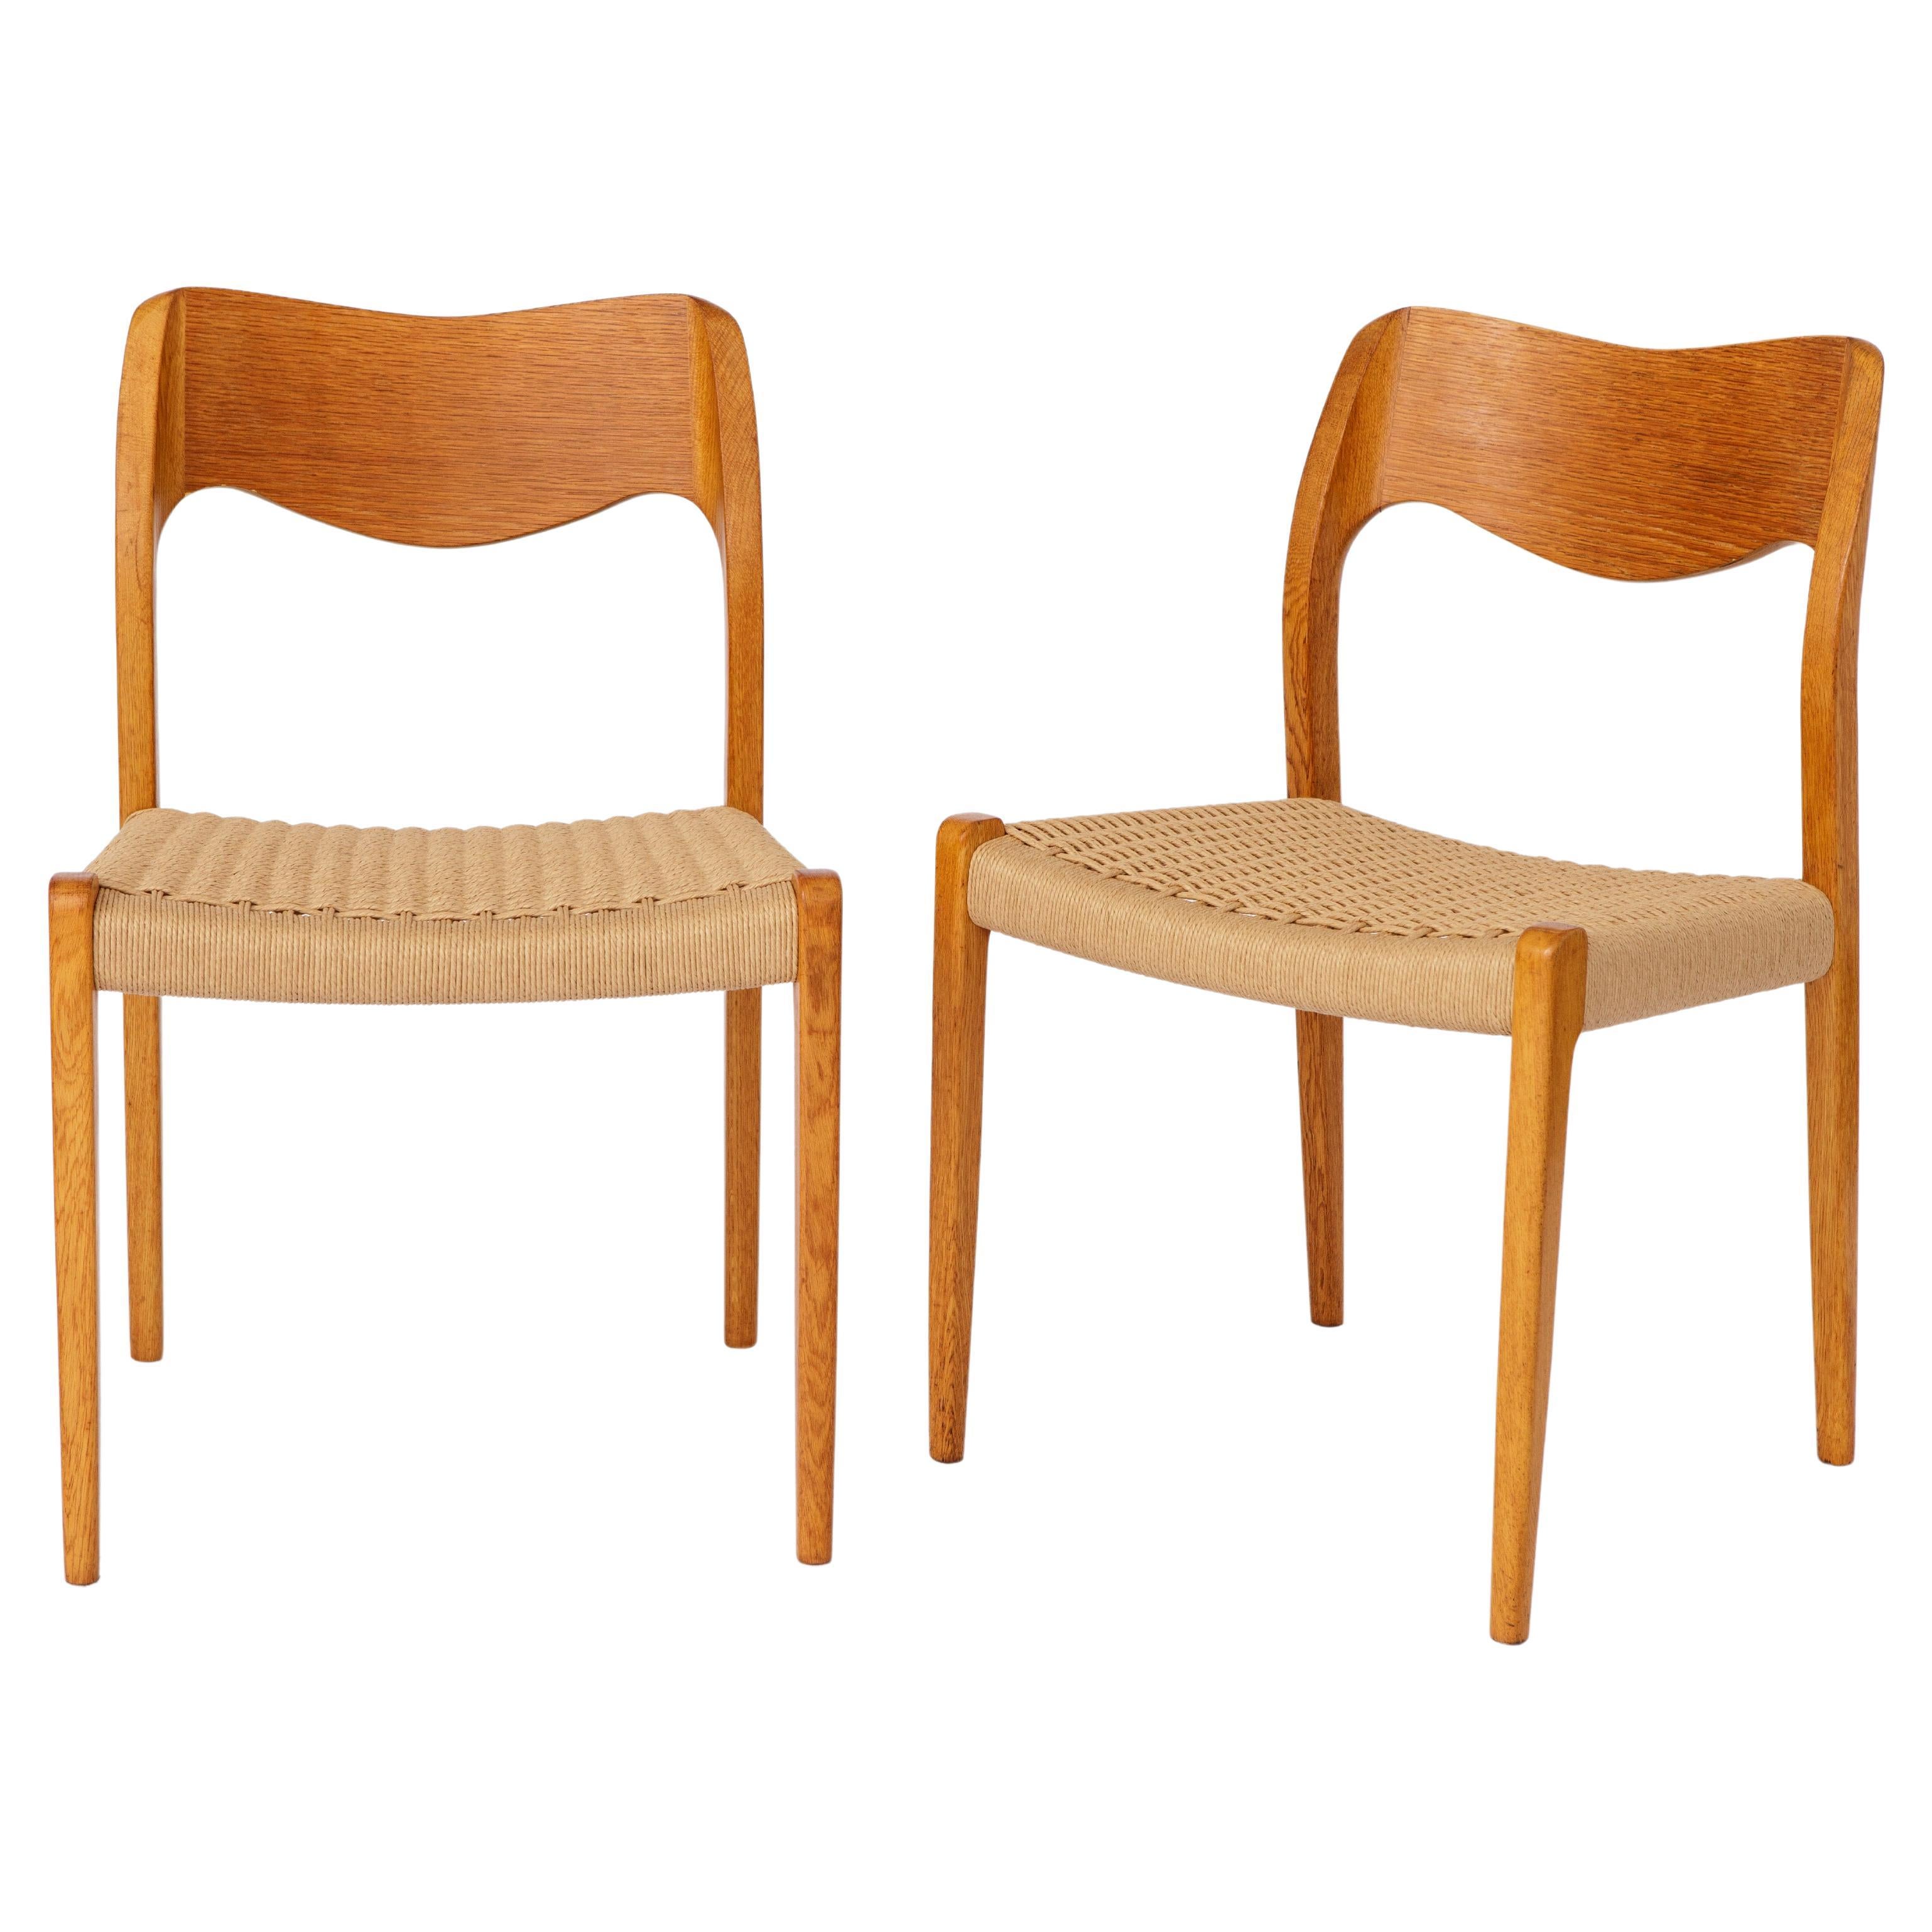 Pair Niels Moller Chairs, model 71 Oak, 1950s Vintage Danish